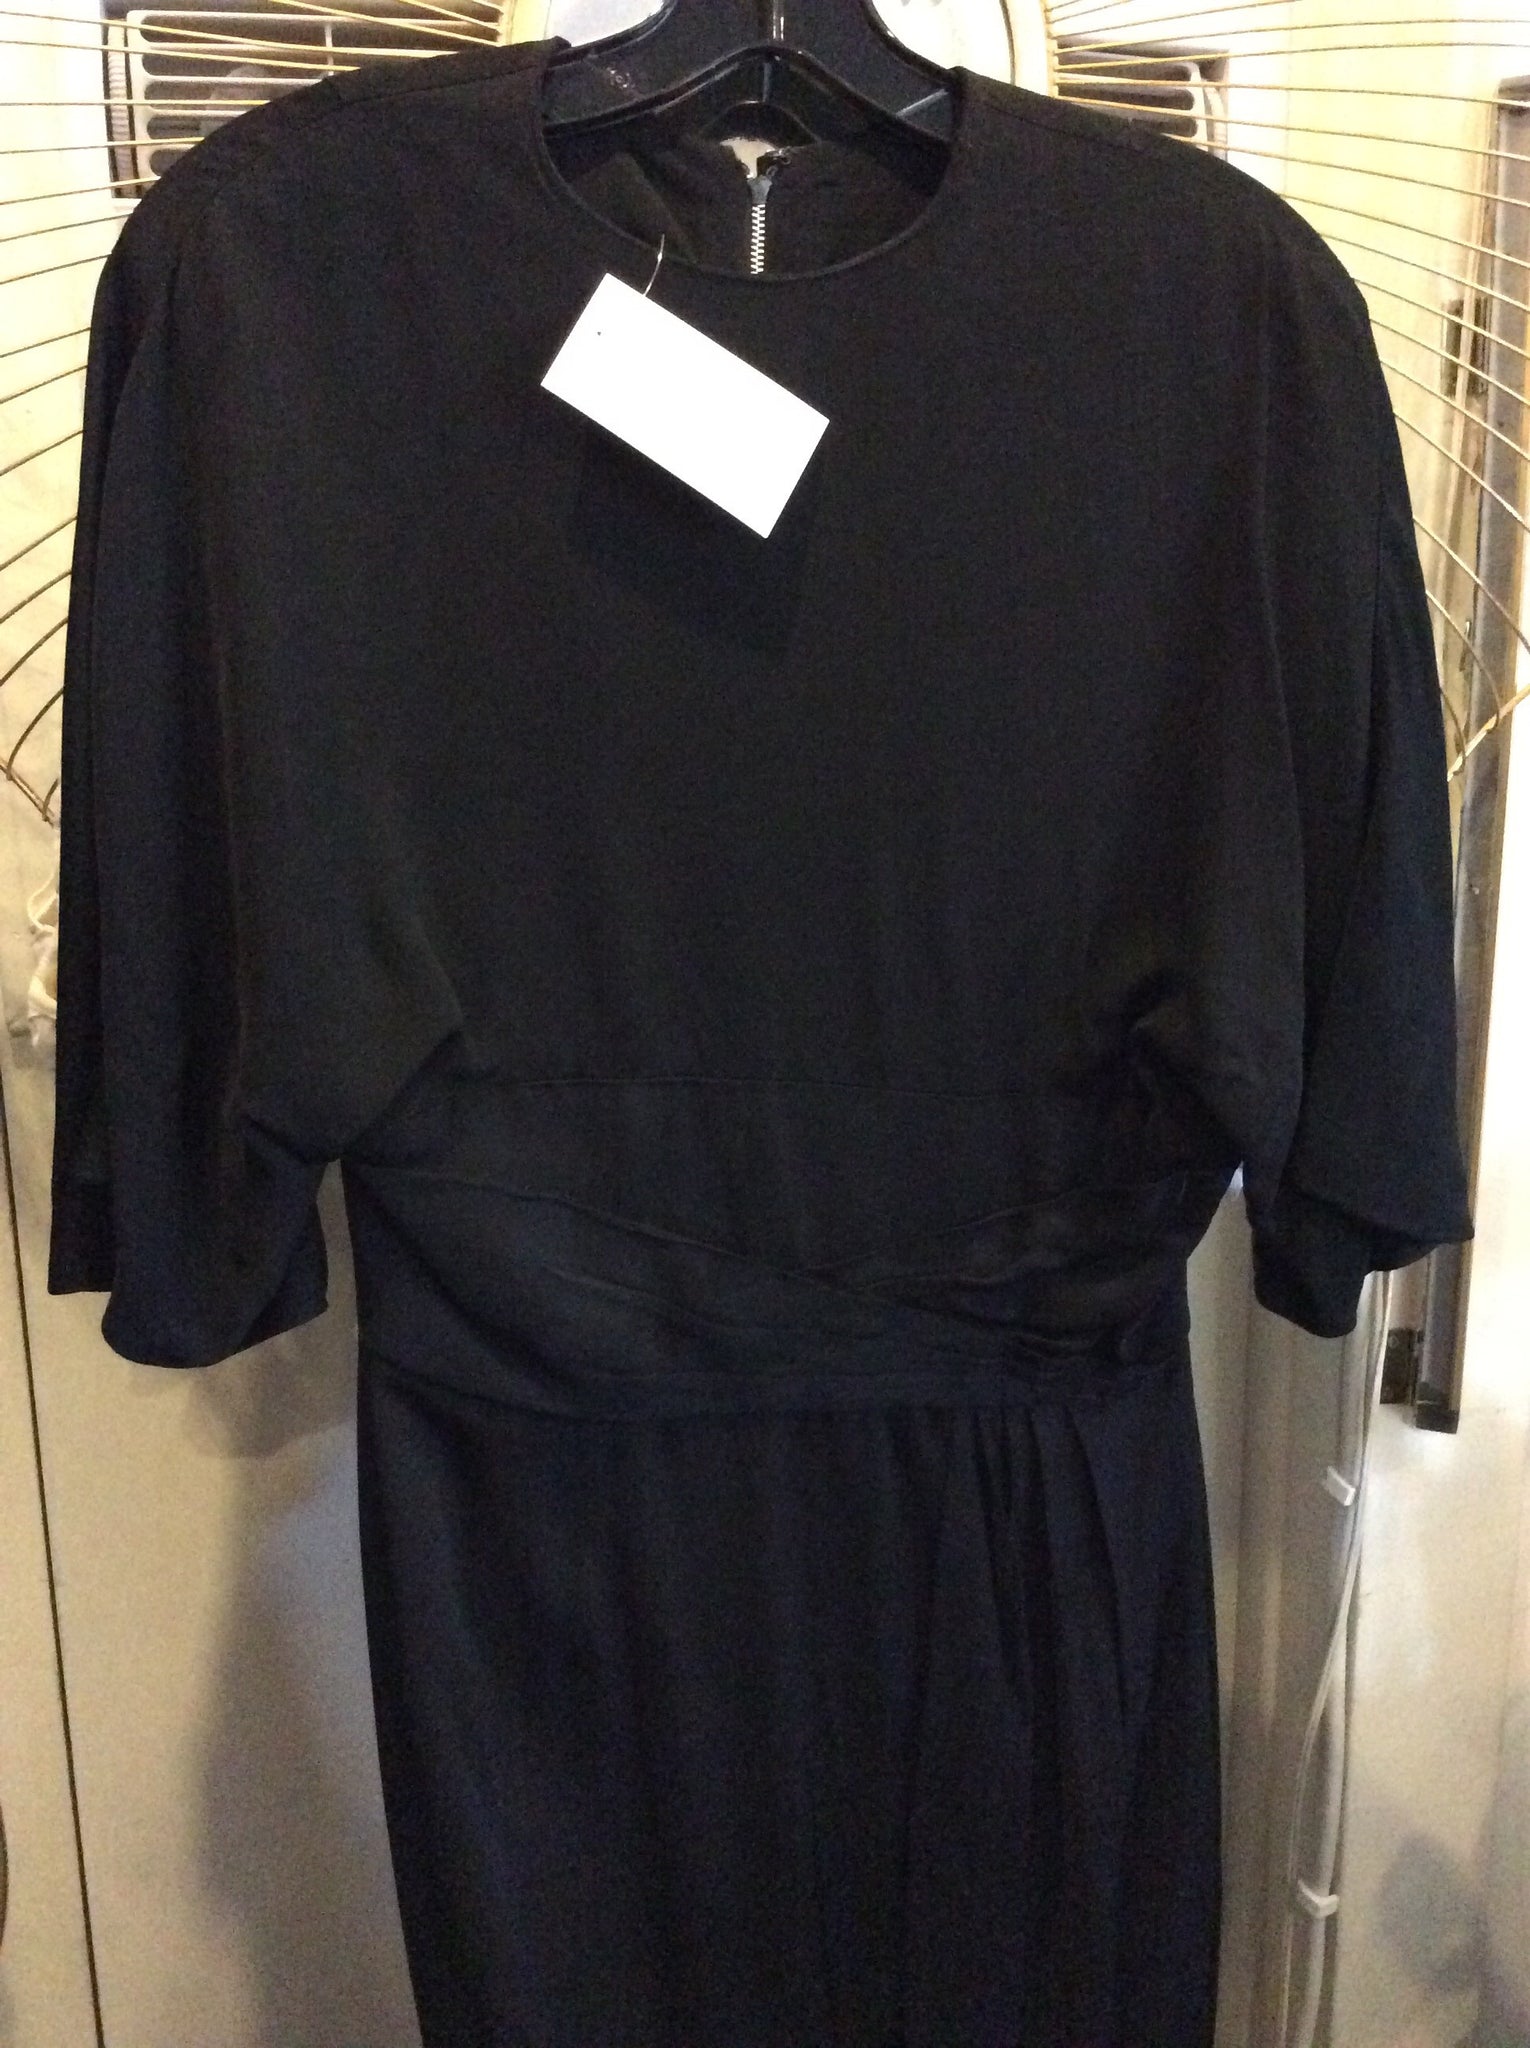 1960s black wide sleeve dress